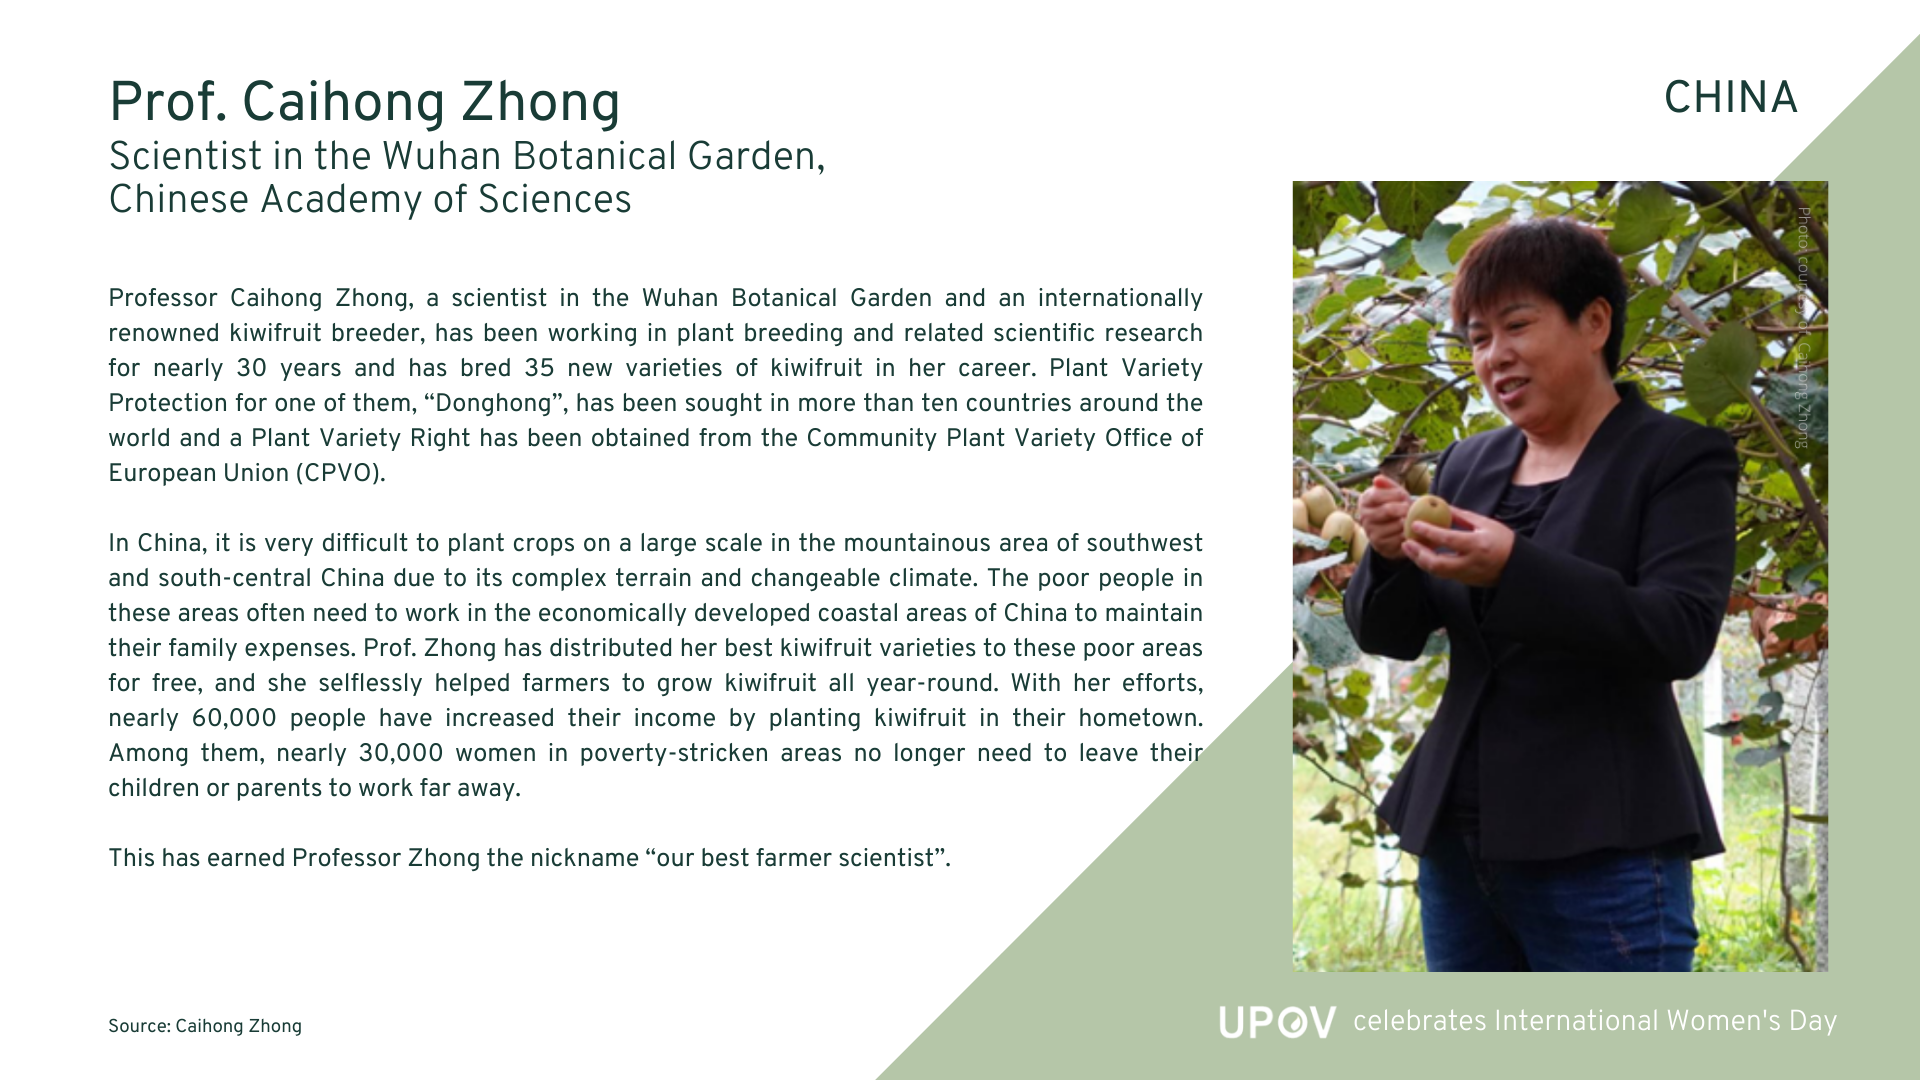 Prof. Caihong Zhong